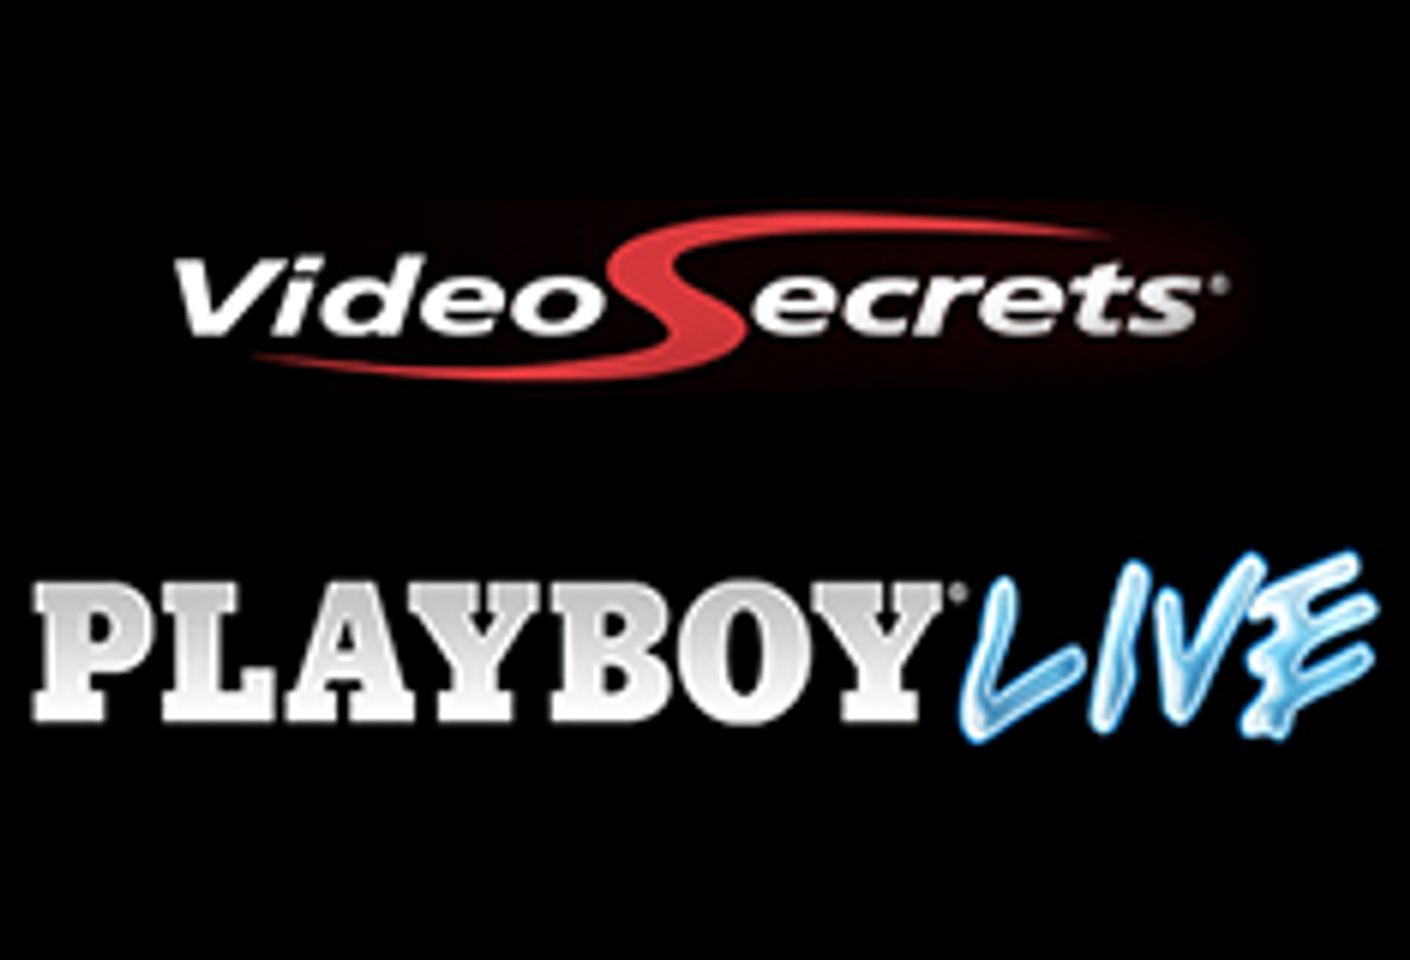 Video Secrets, Playboy to Award Ultimate Getaway